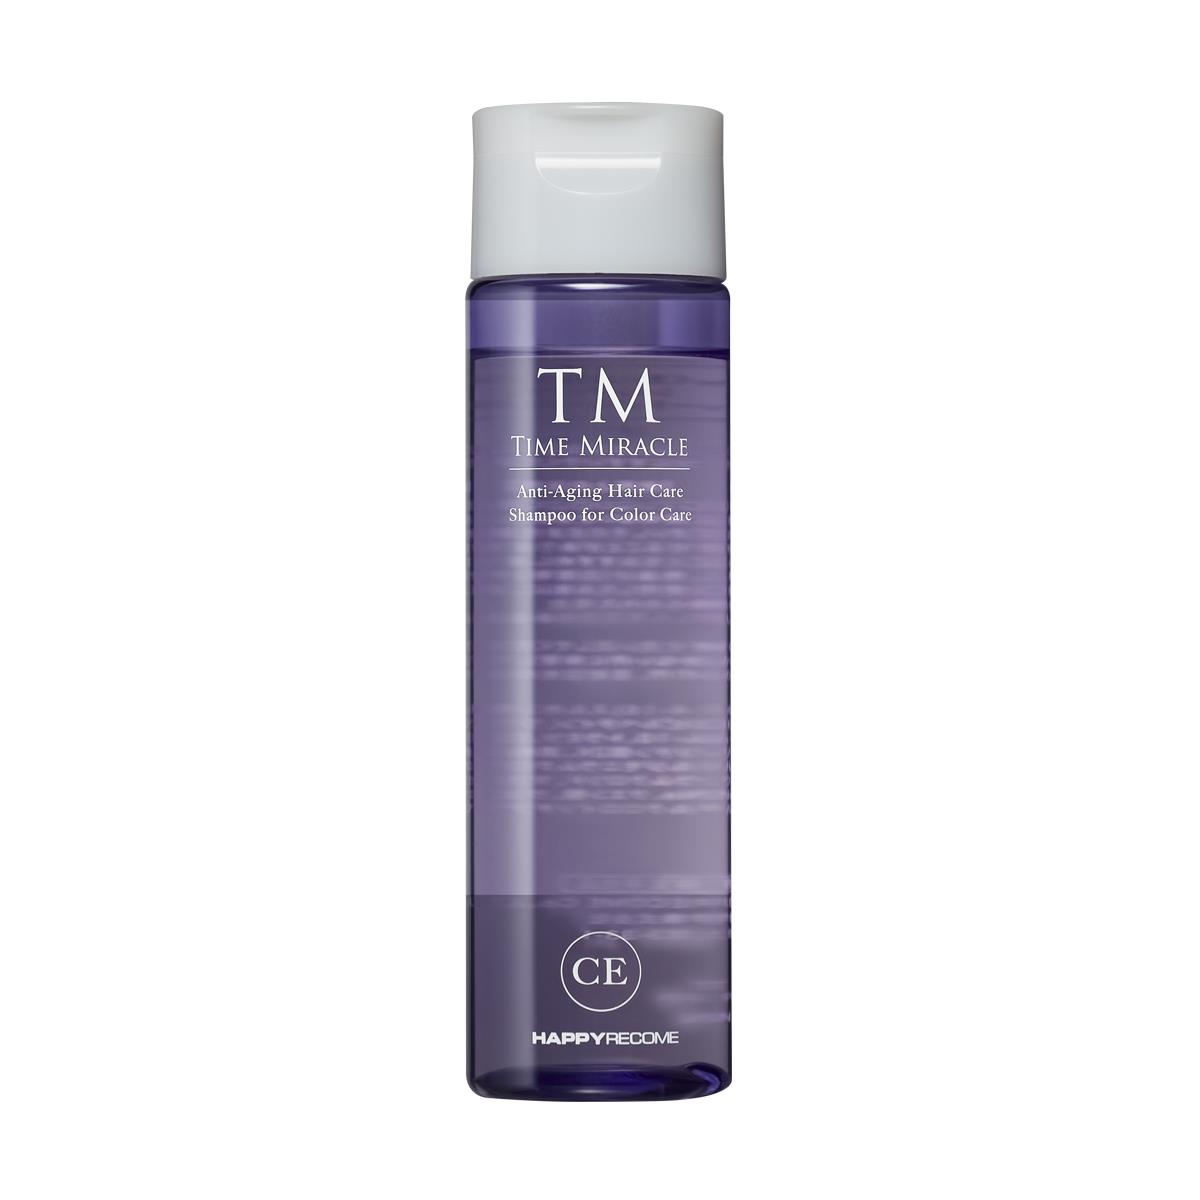 TM 小時光髮浴185mL_CE護色型